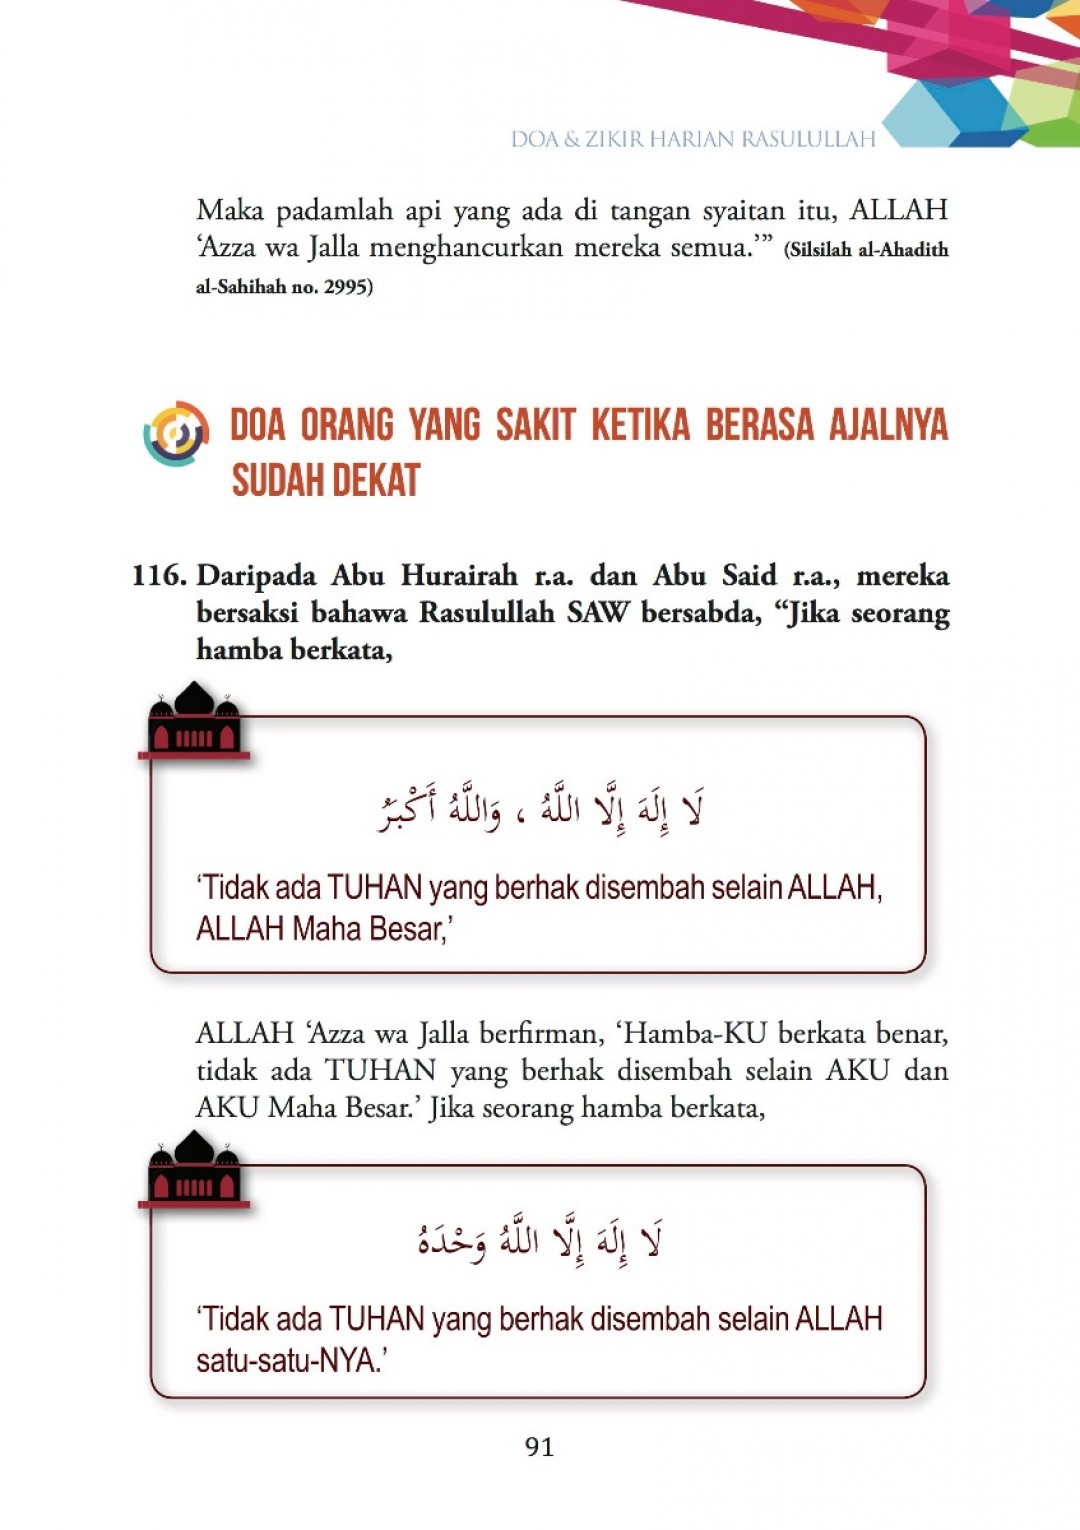 Doa & Zikir Harian Rasulullah - Rufaiq Al-Islam